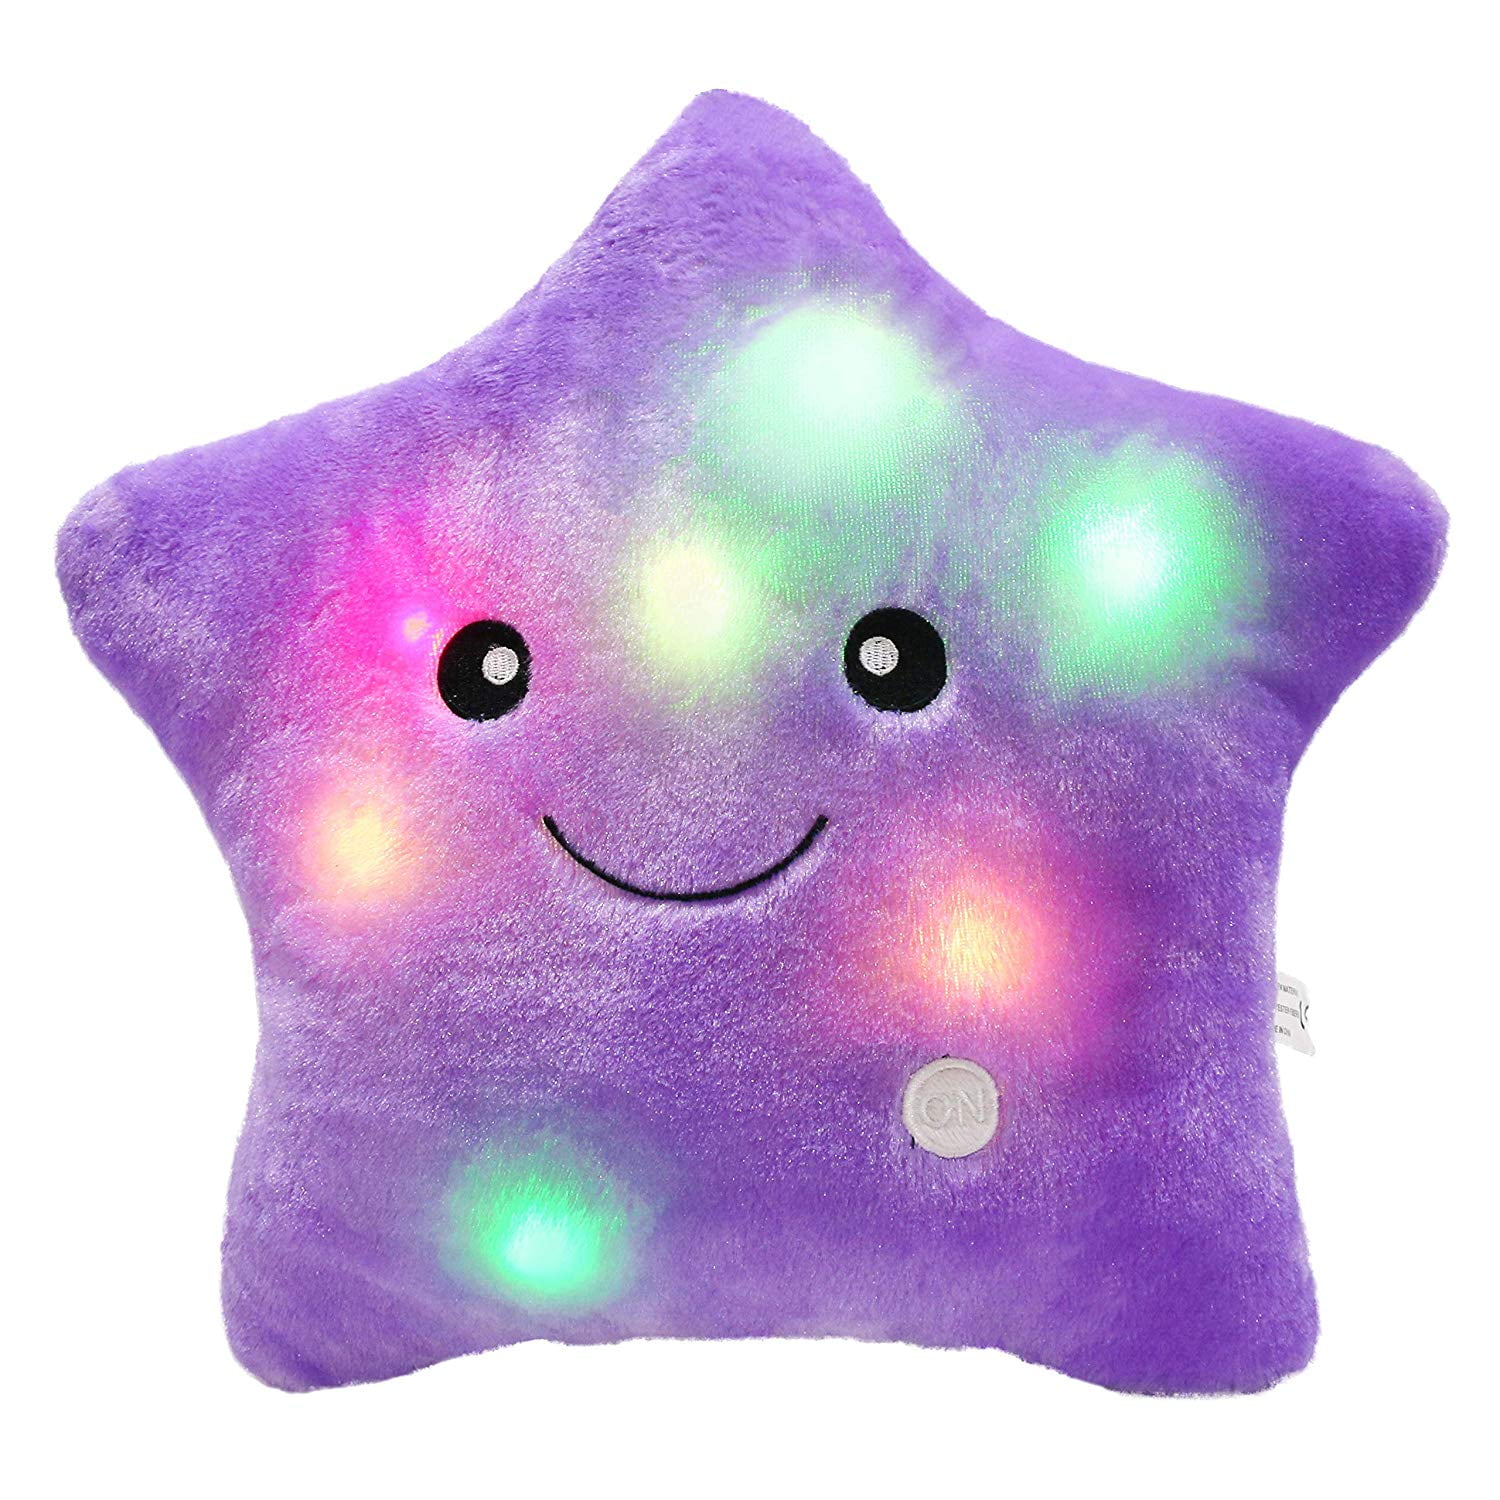 NWT Nico Nico Brand Purple Star Cushion Pillow Plush With Smiling Face 